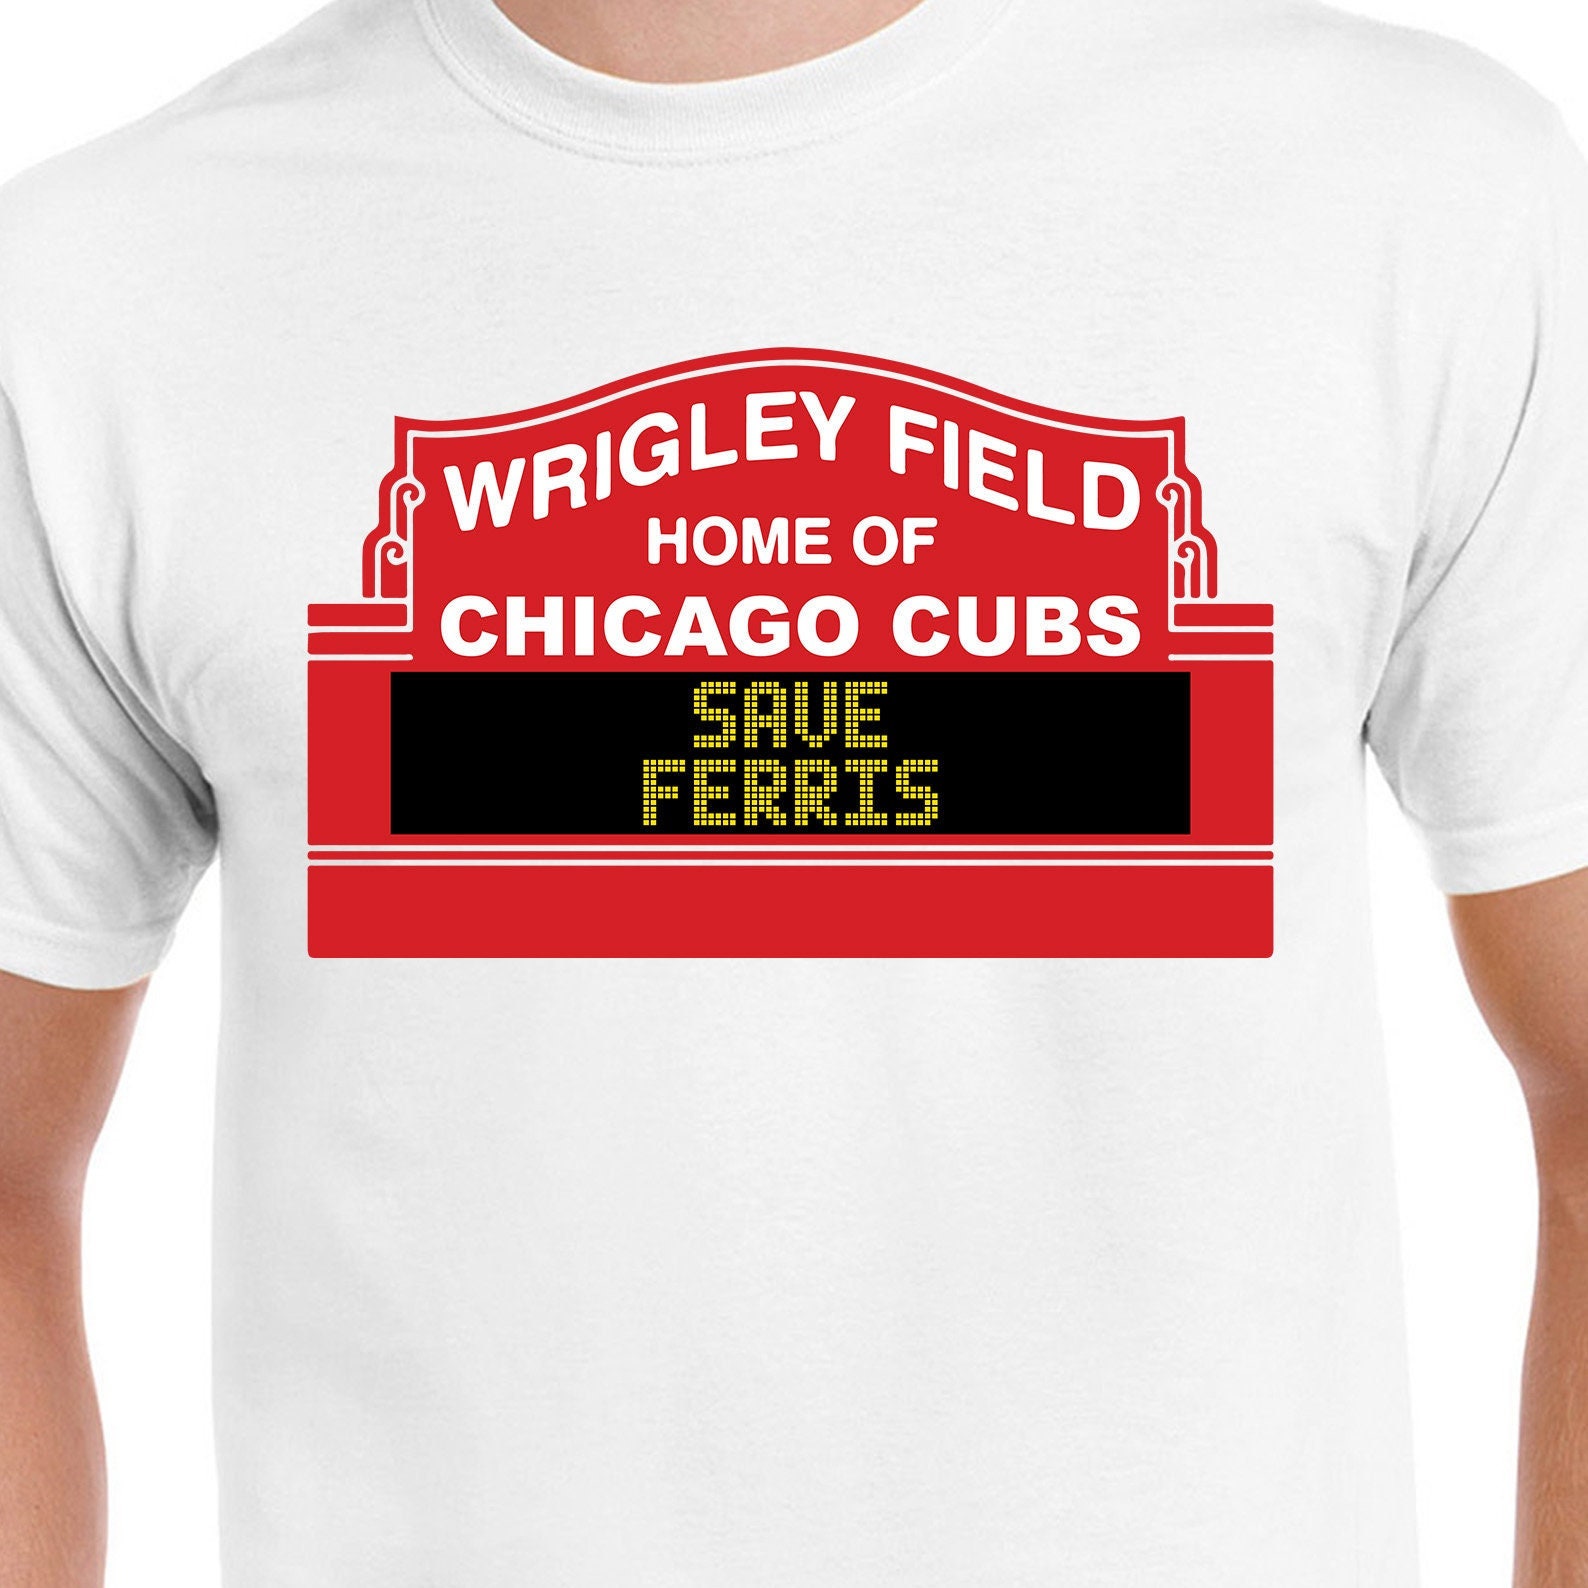 Ferris Bueller's Day Off Movie Save Ferris Cameron Frye Graphic T Shirt Sz  Large